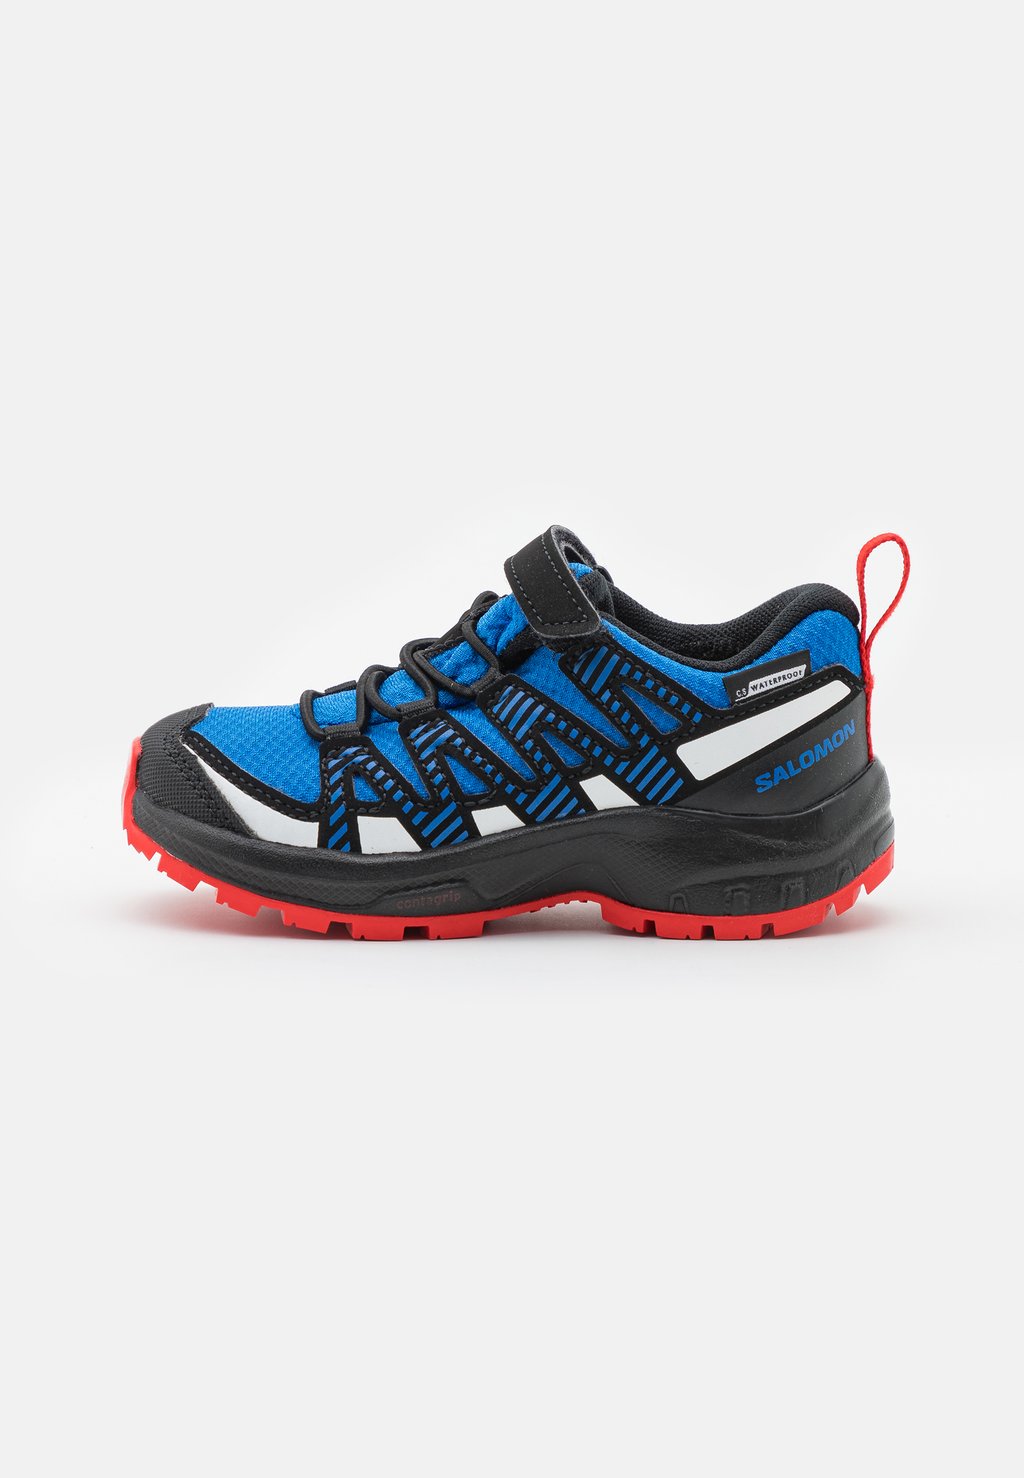 Кроссовки для походов Xa Pro V8 Cswp Unisex Salomon, цвет lapis blue/black/fiery red грипсы fiery blue